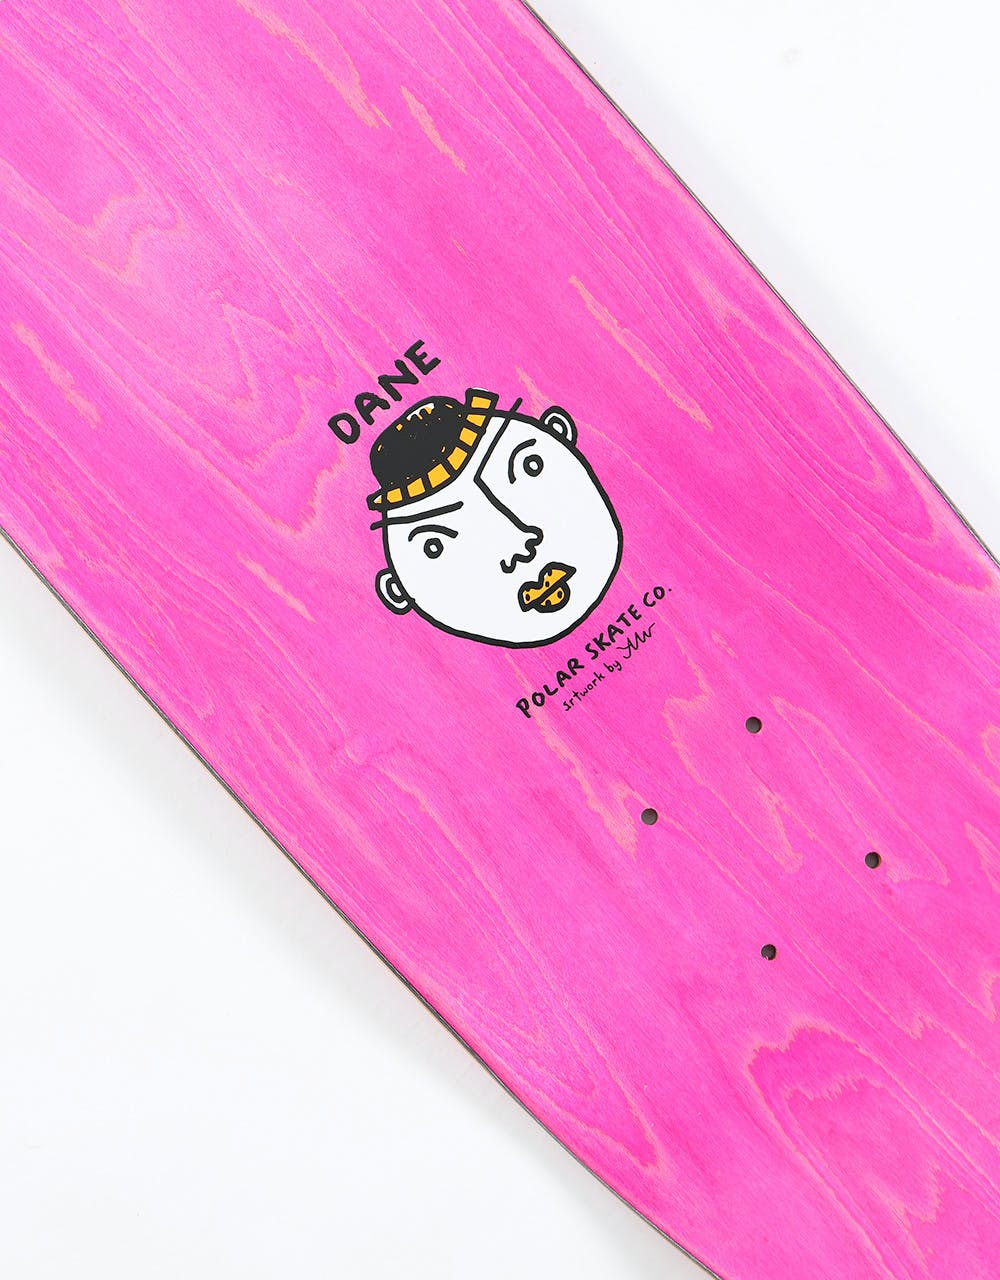 Polar Brady Portrait Skateboard Deck - FOOTBALL Shape 9.25"